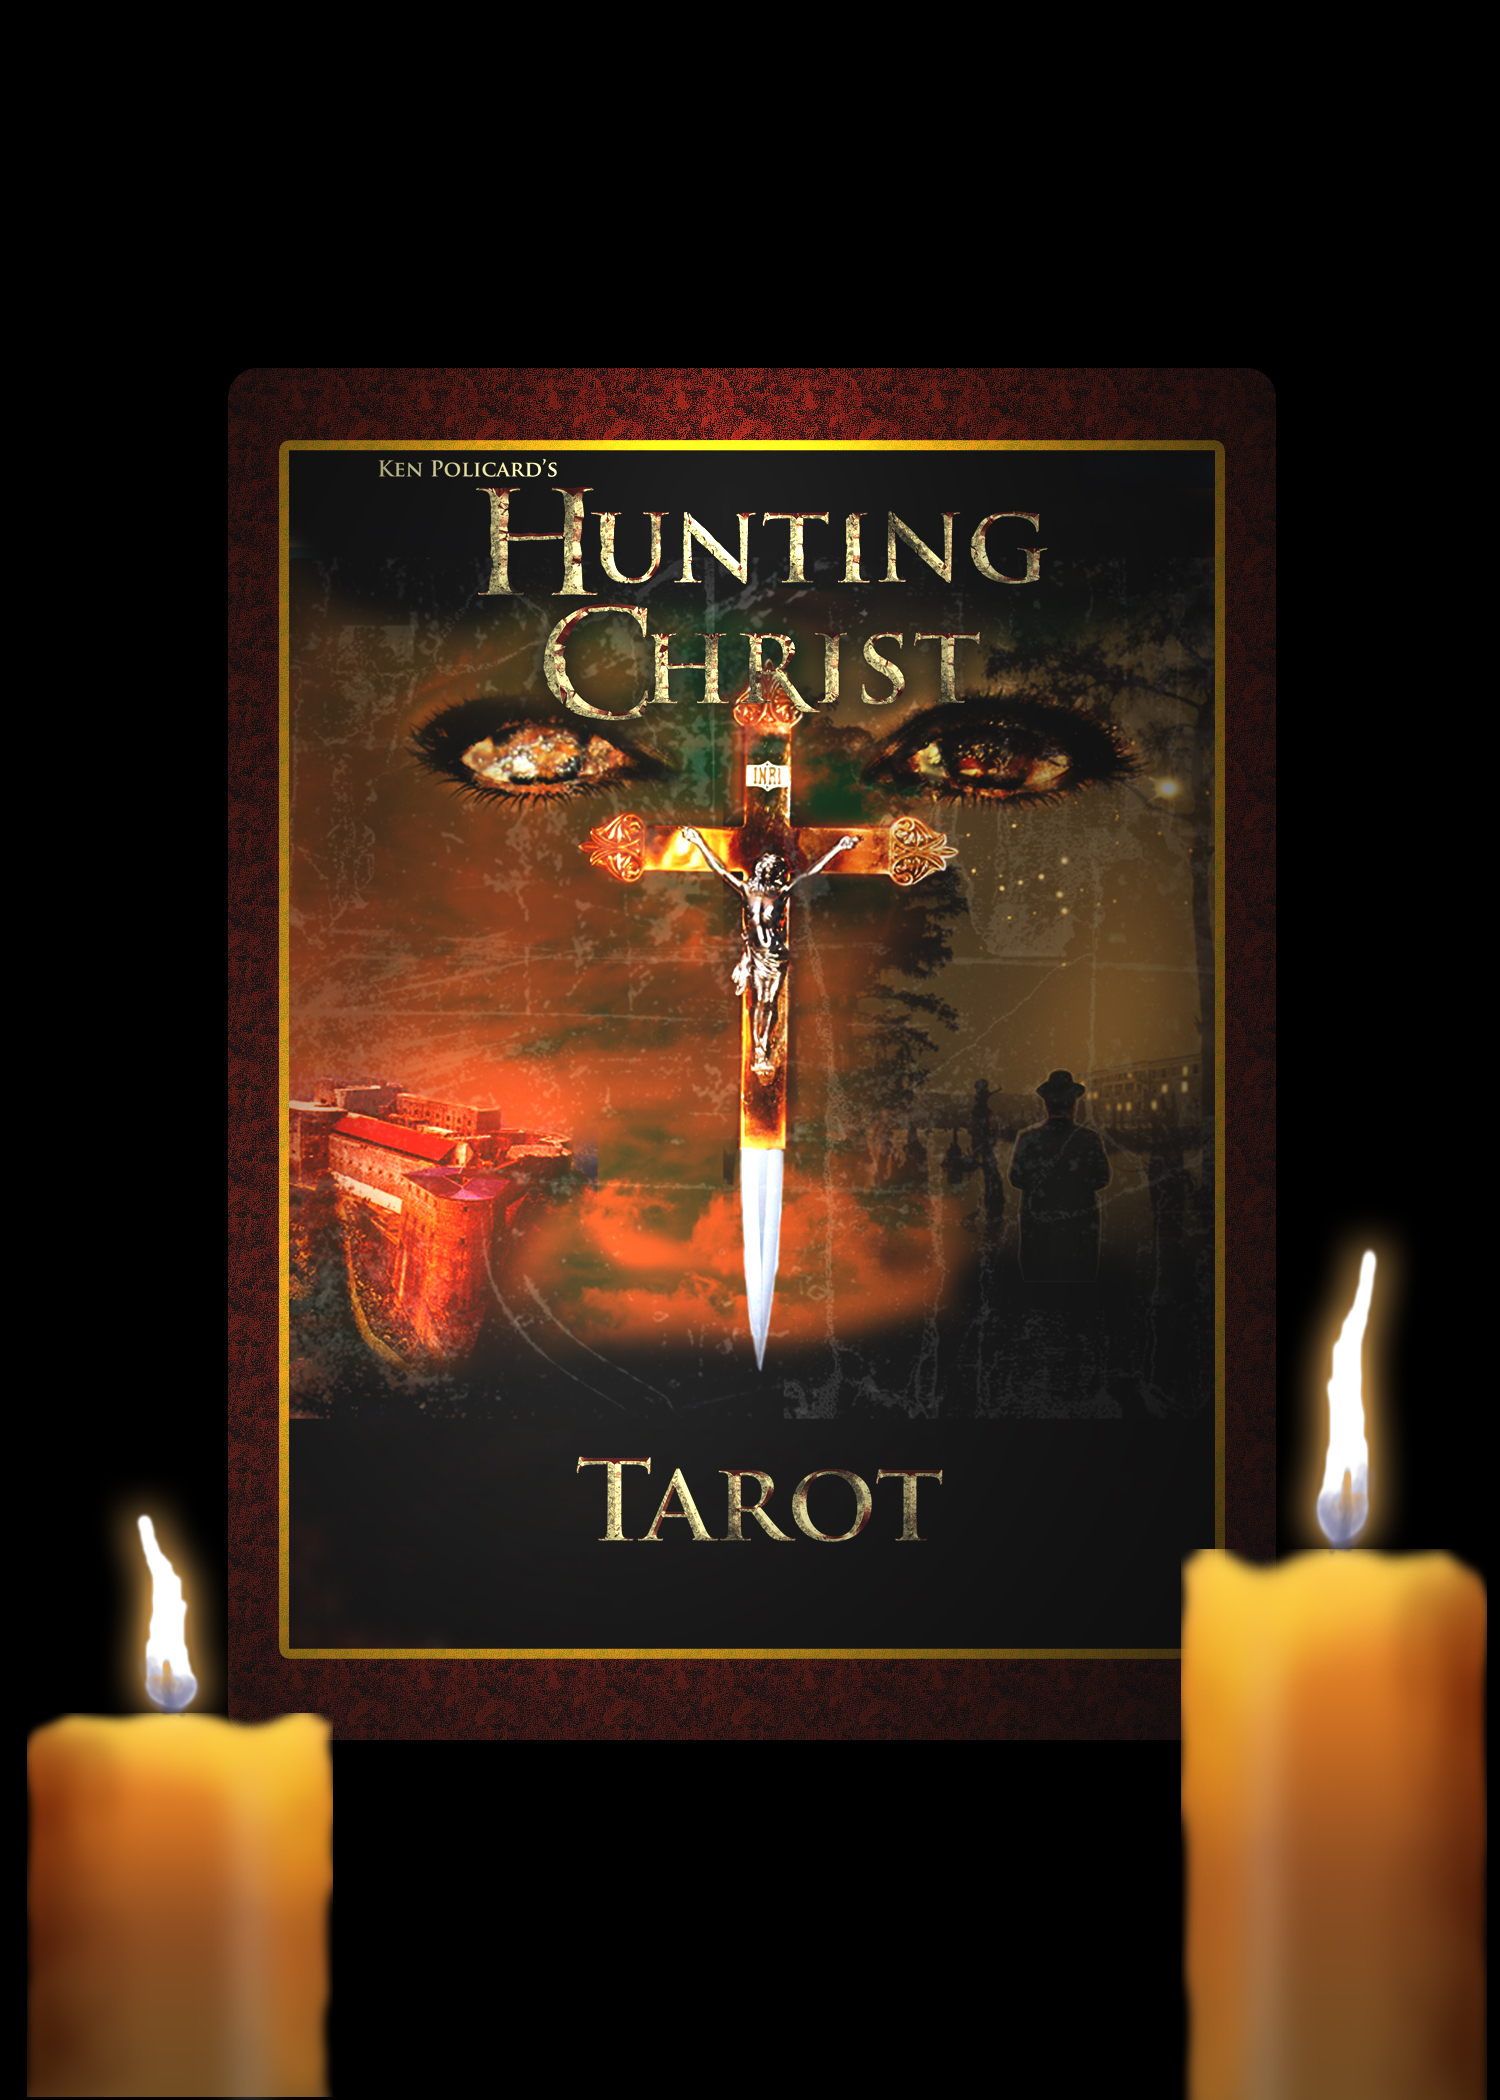 HUNTING CHRIST - TAROT CARDS